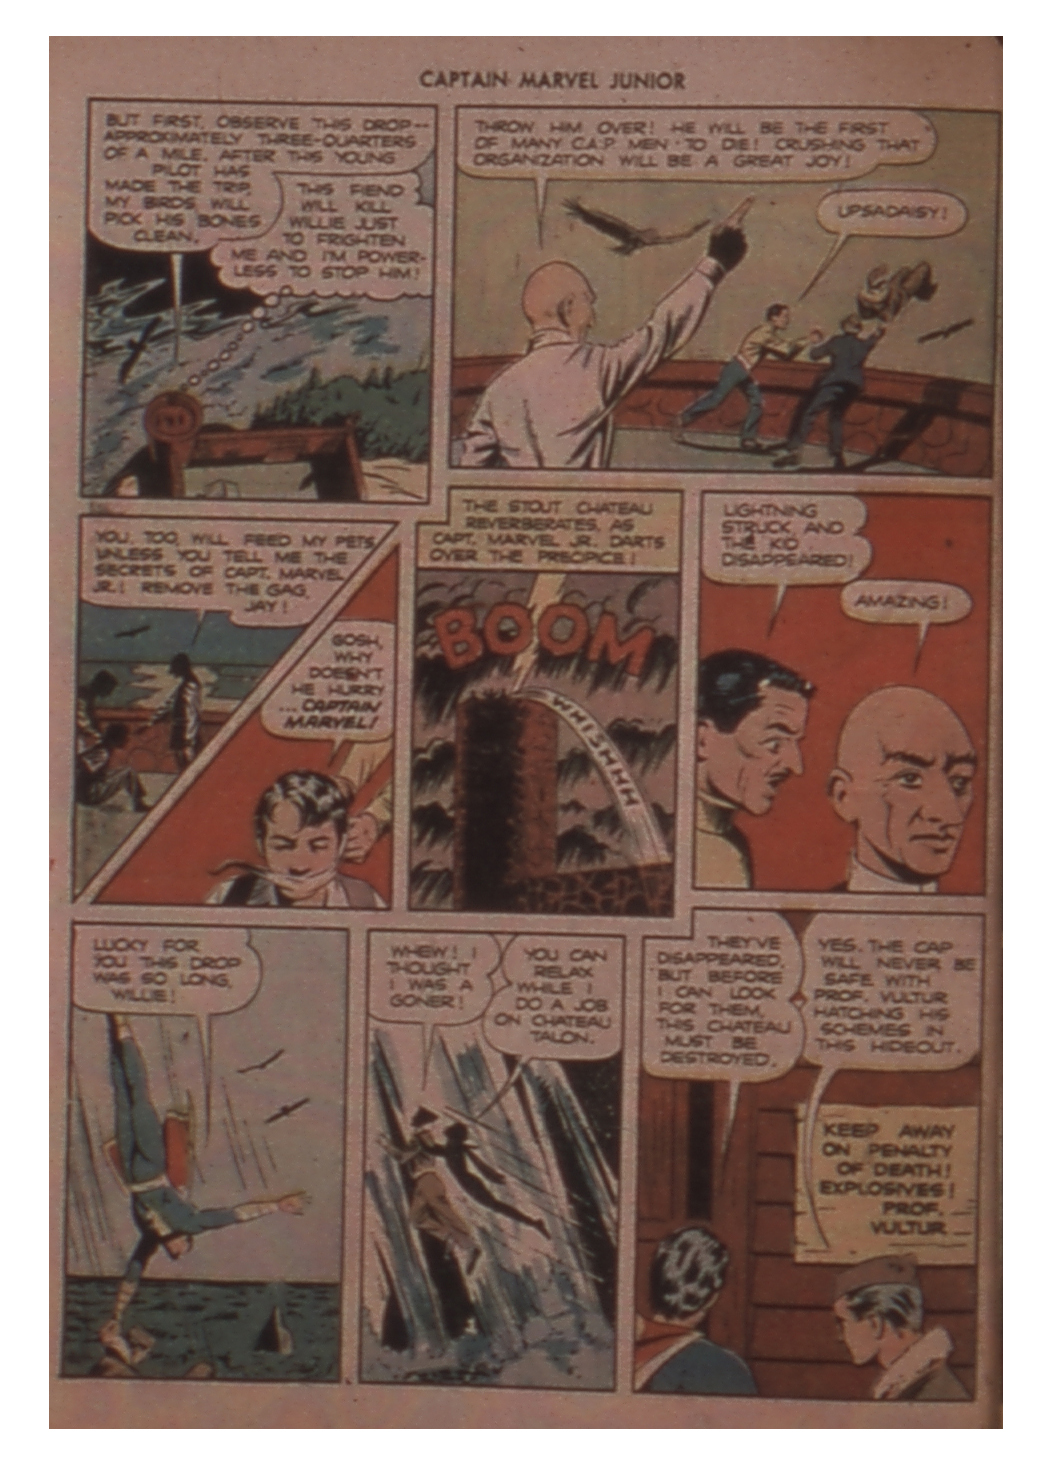 Read online Captain Marvel, Jr. comic -  Issue #24 - 8